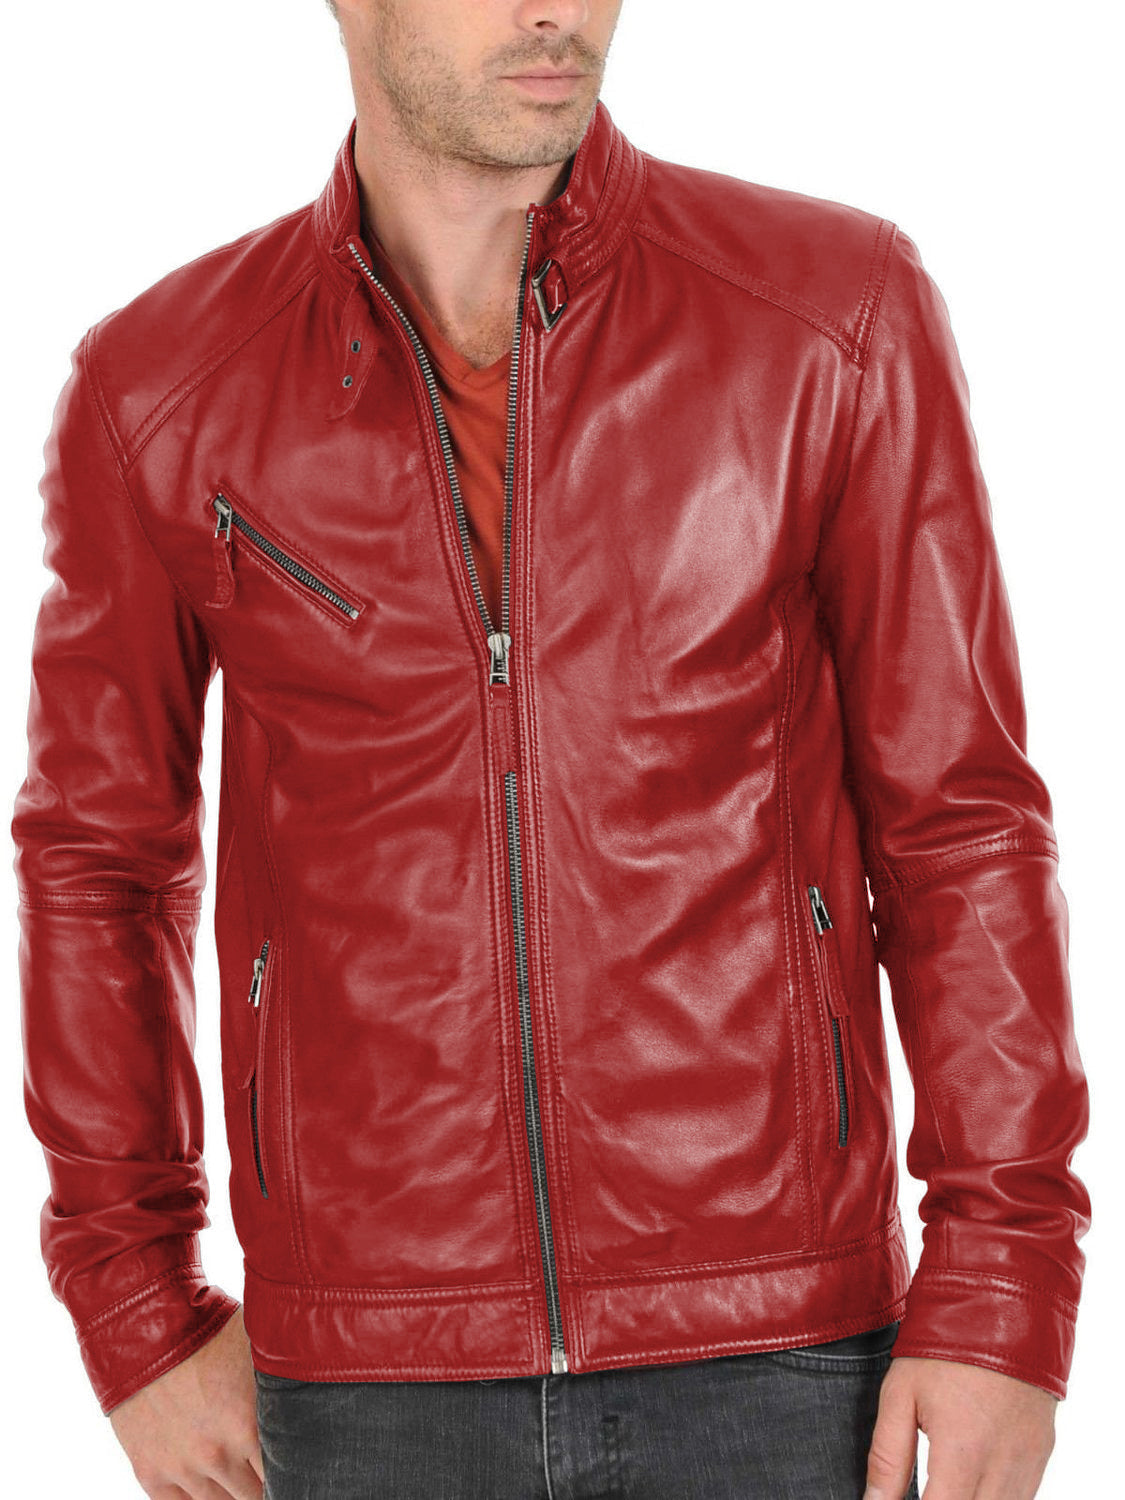 Leather Jackets Hub Mens Genuine Lambskin Leather Jacket (Black, Classic Jacket) - 1501125